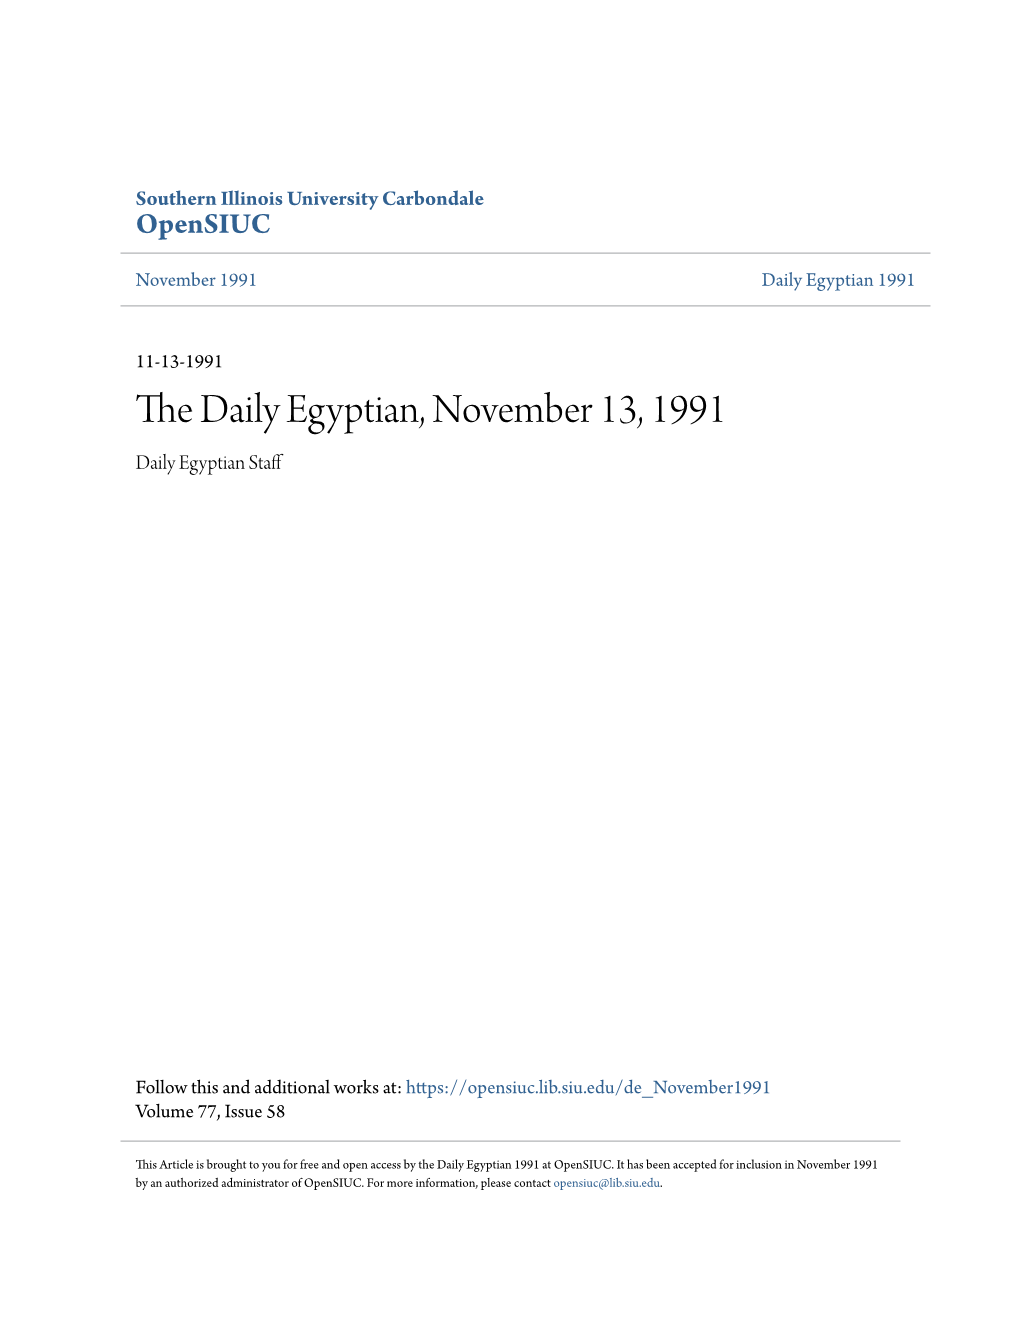 The Daily Egyptian, November 13, 1991